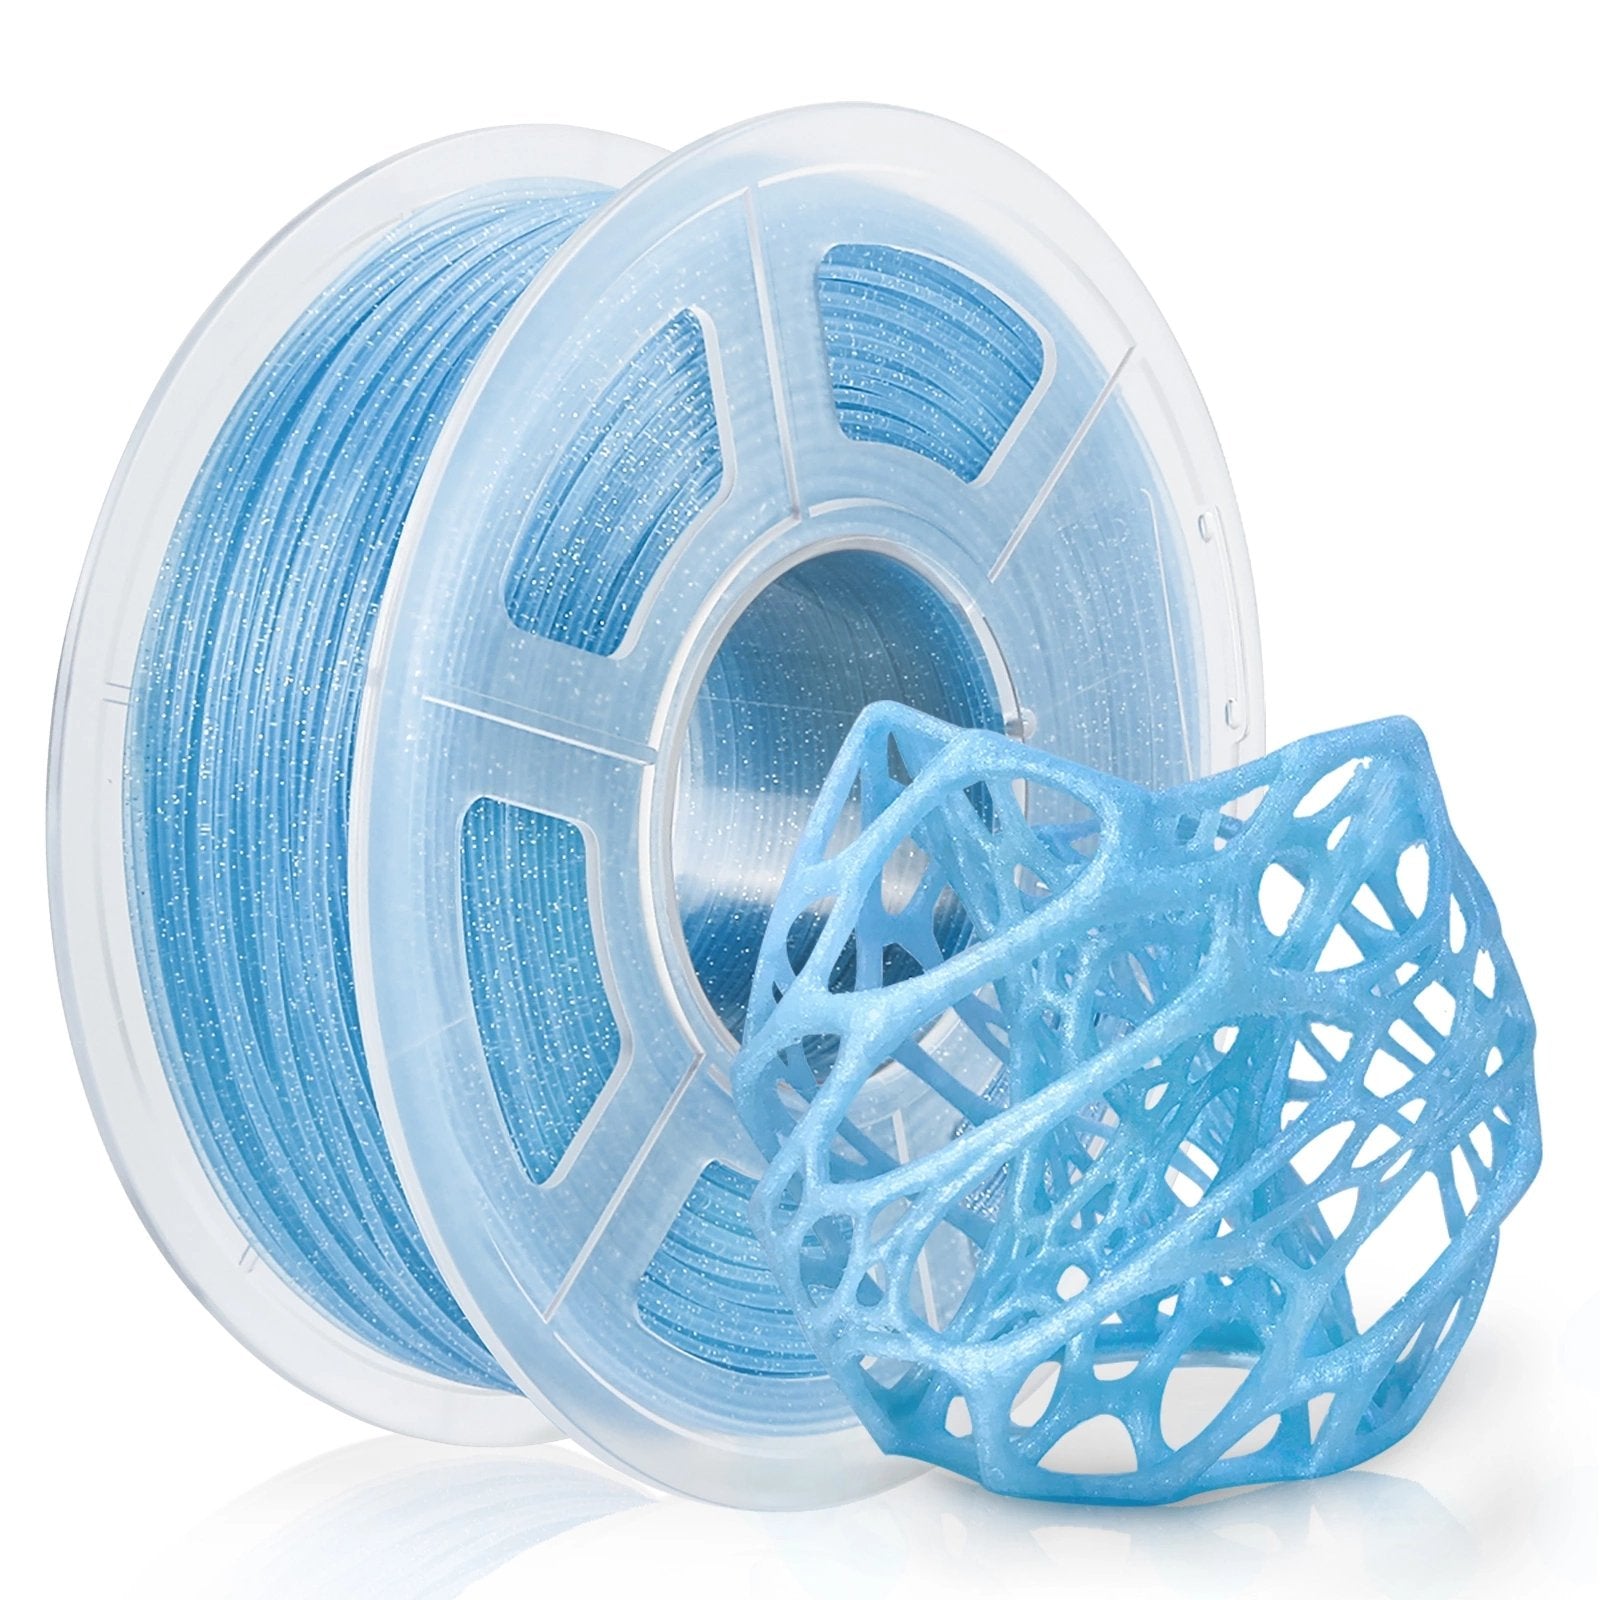 3D Printer Filament PLA PLUS 1KG *!SPECIAL SUNLU!* $25/roll